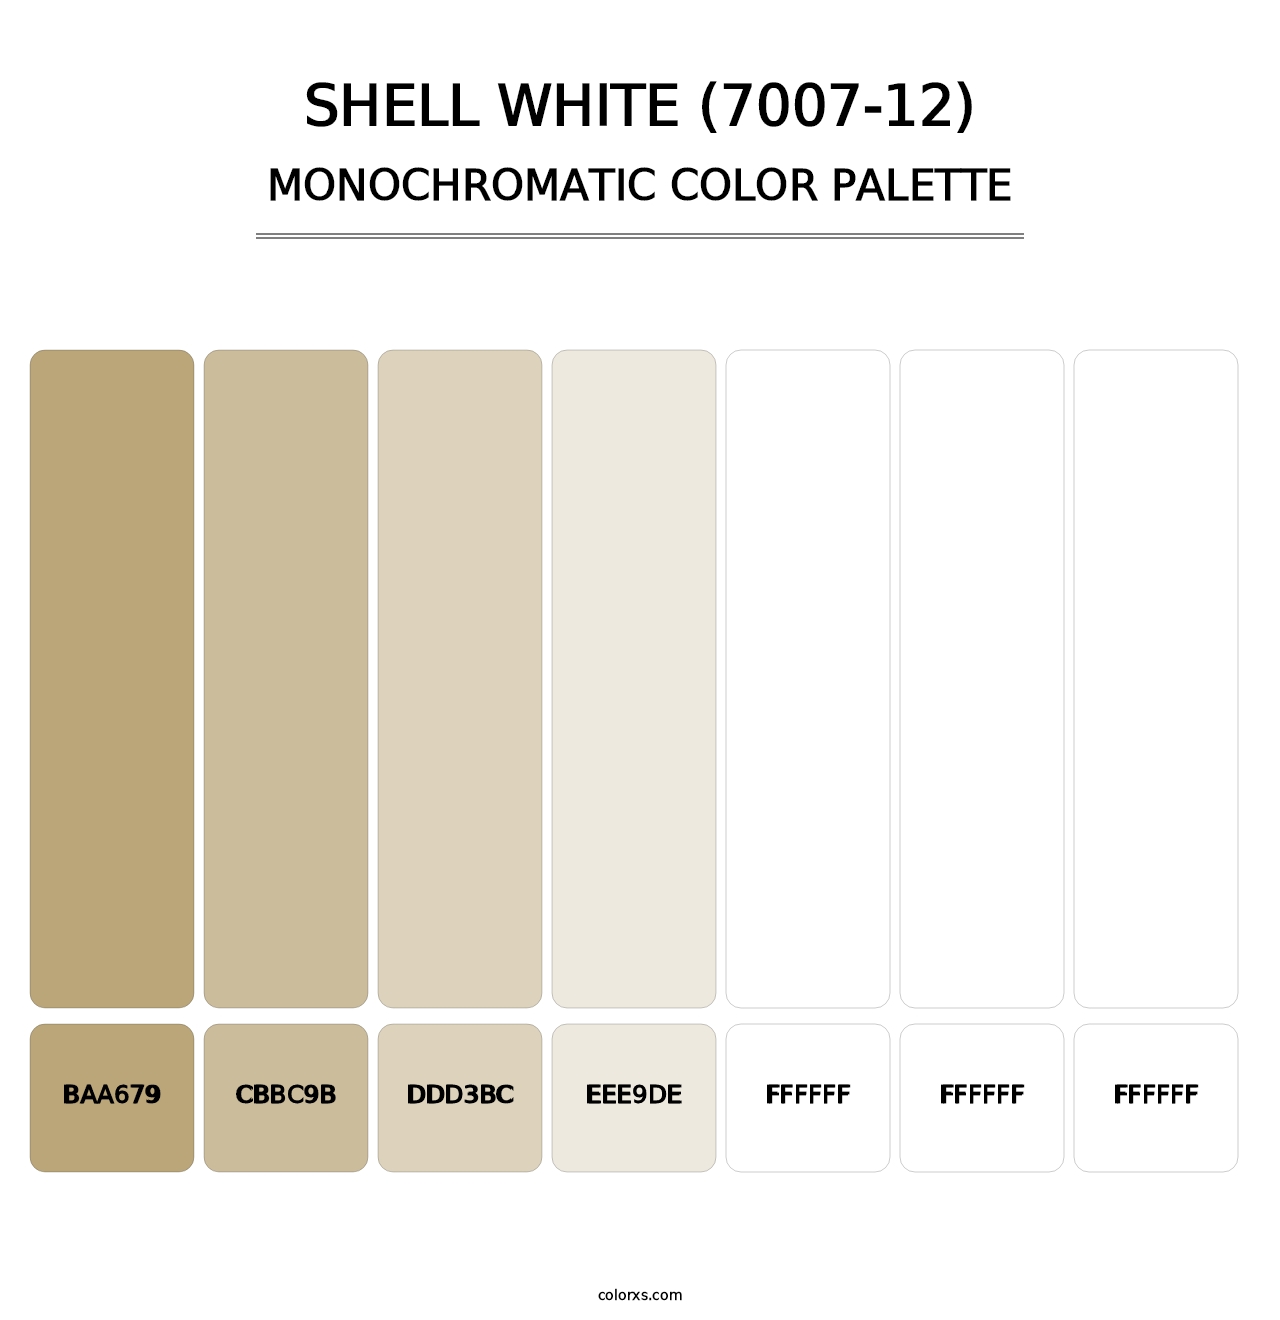 Shell White (7007-12) - Monochromatic Color Palette